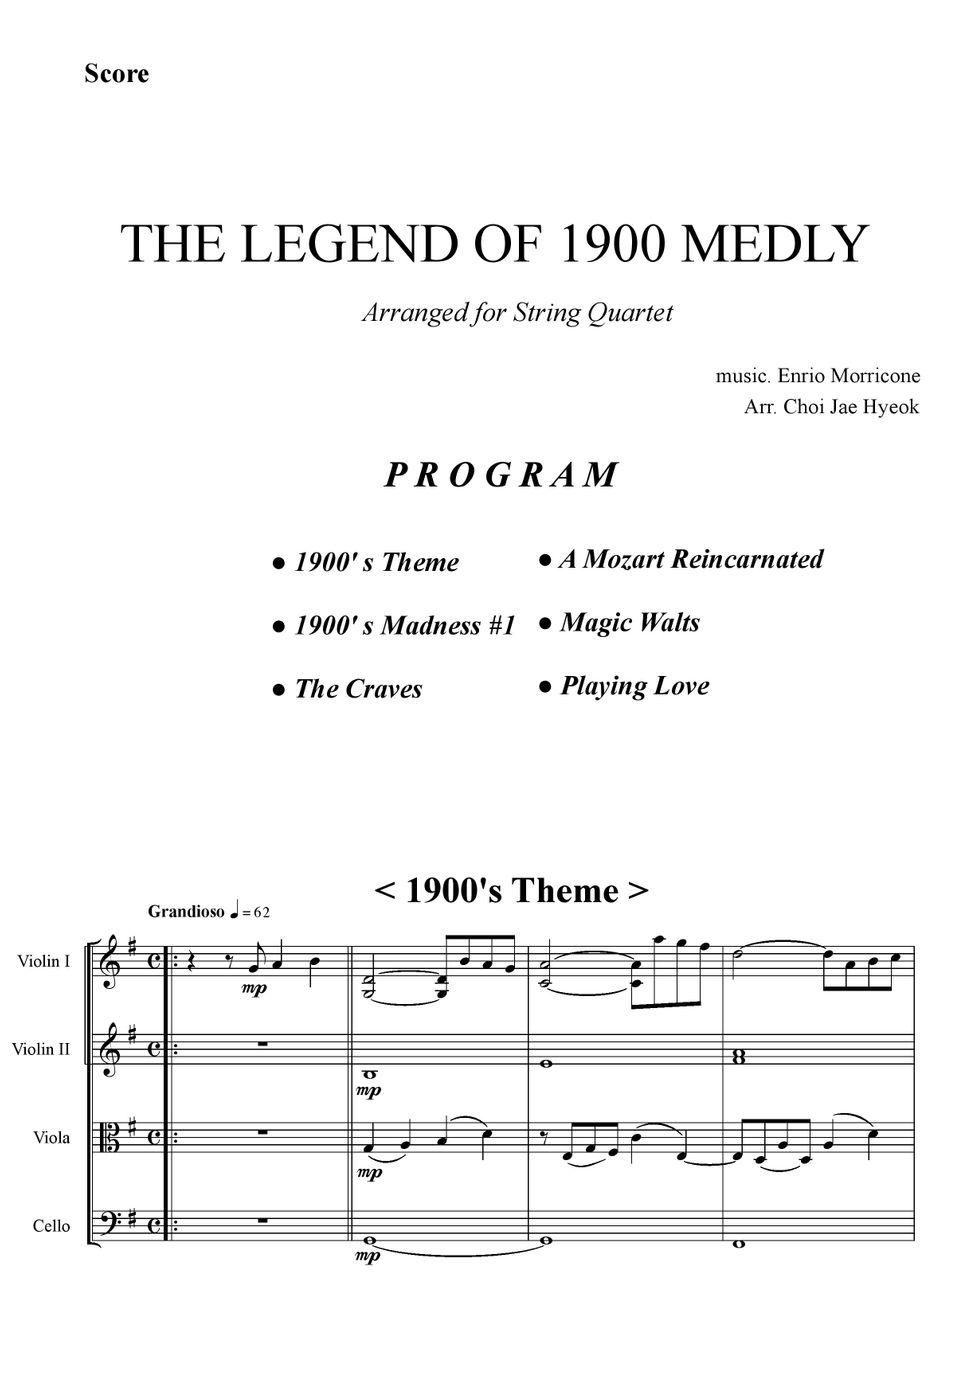 Enrio Morricone - The Legend of 1900 for String Quartet (현악 4중주) by Jaehyeok Choi